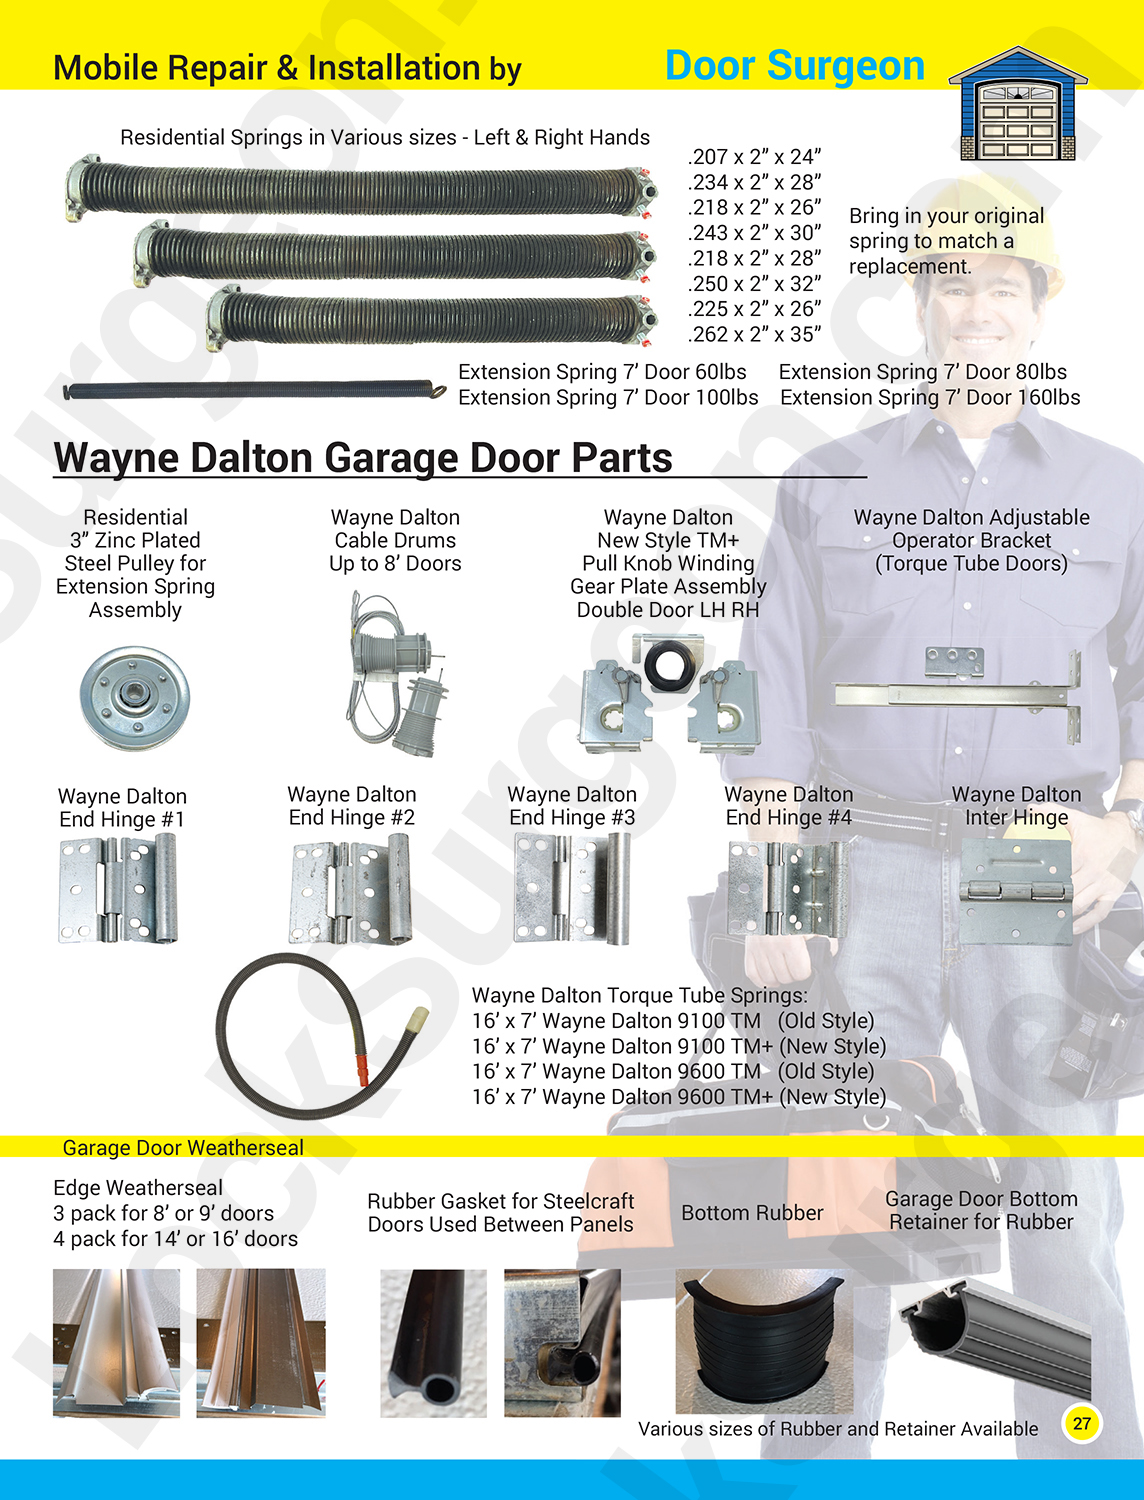 Replacement parts for Wayne Dalton garage doors spring drums gear plates pulleys hinges torque tubes